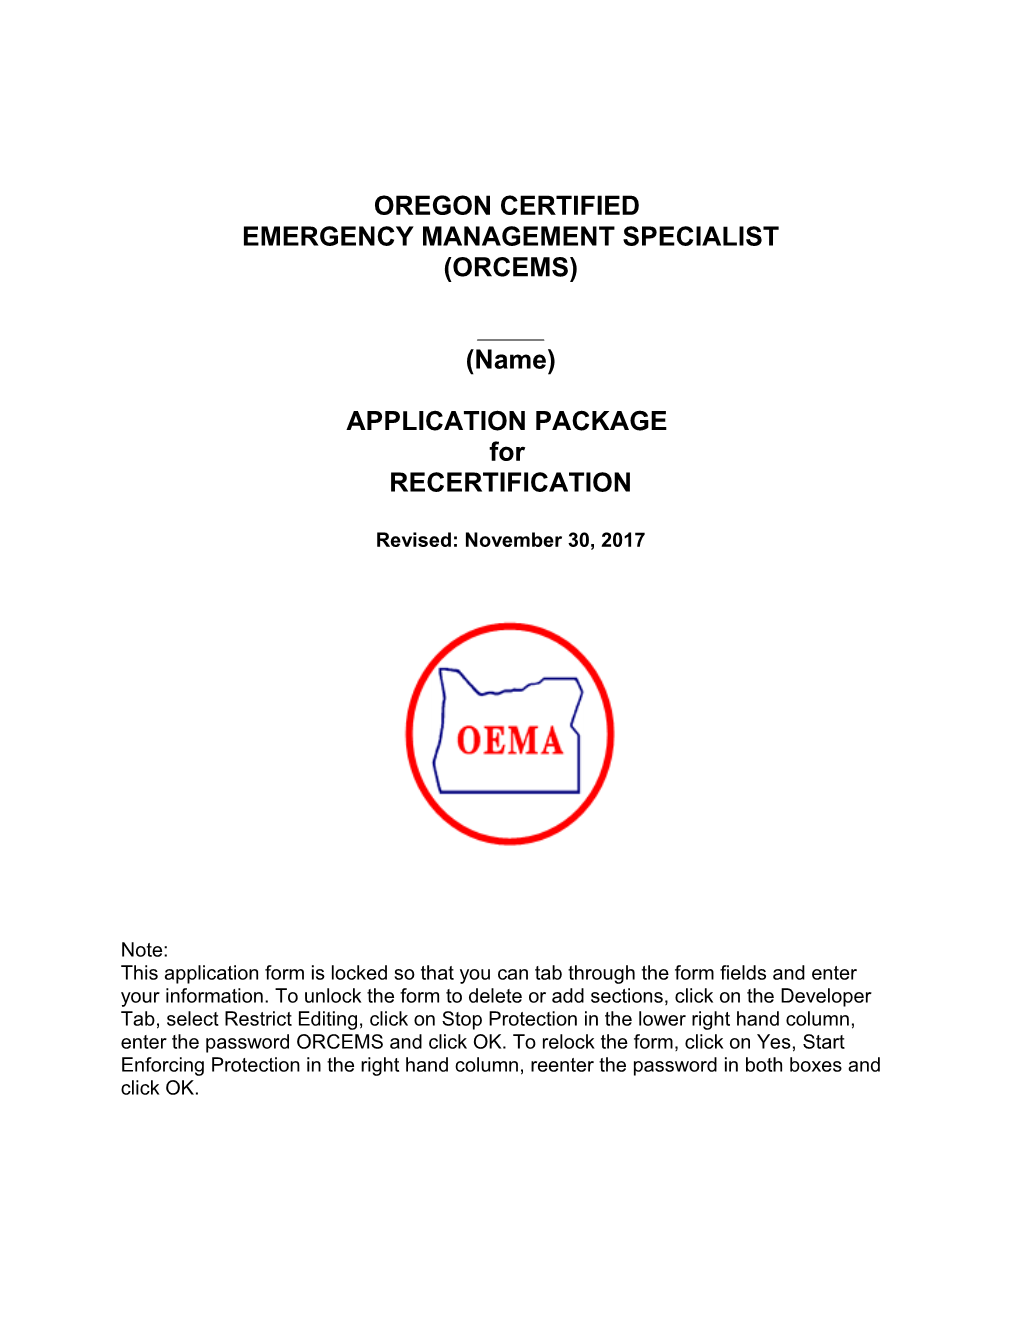 Oregon Certified Emergency Management Specialist